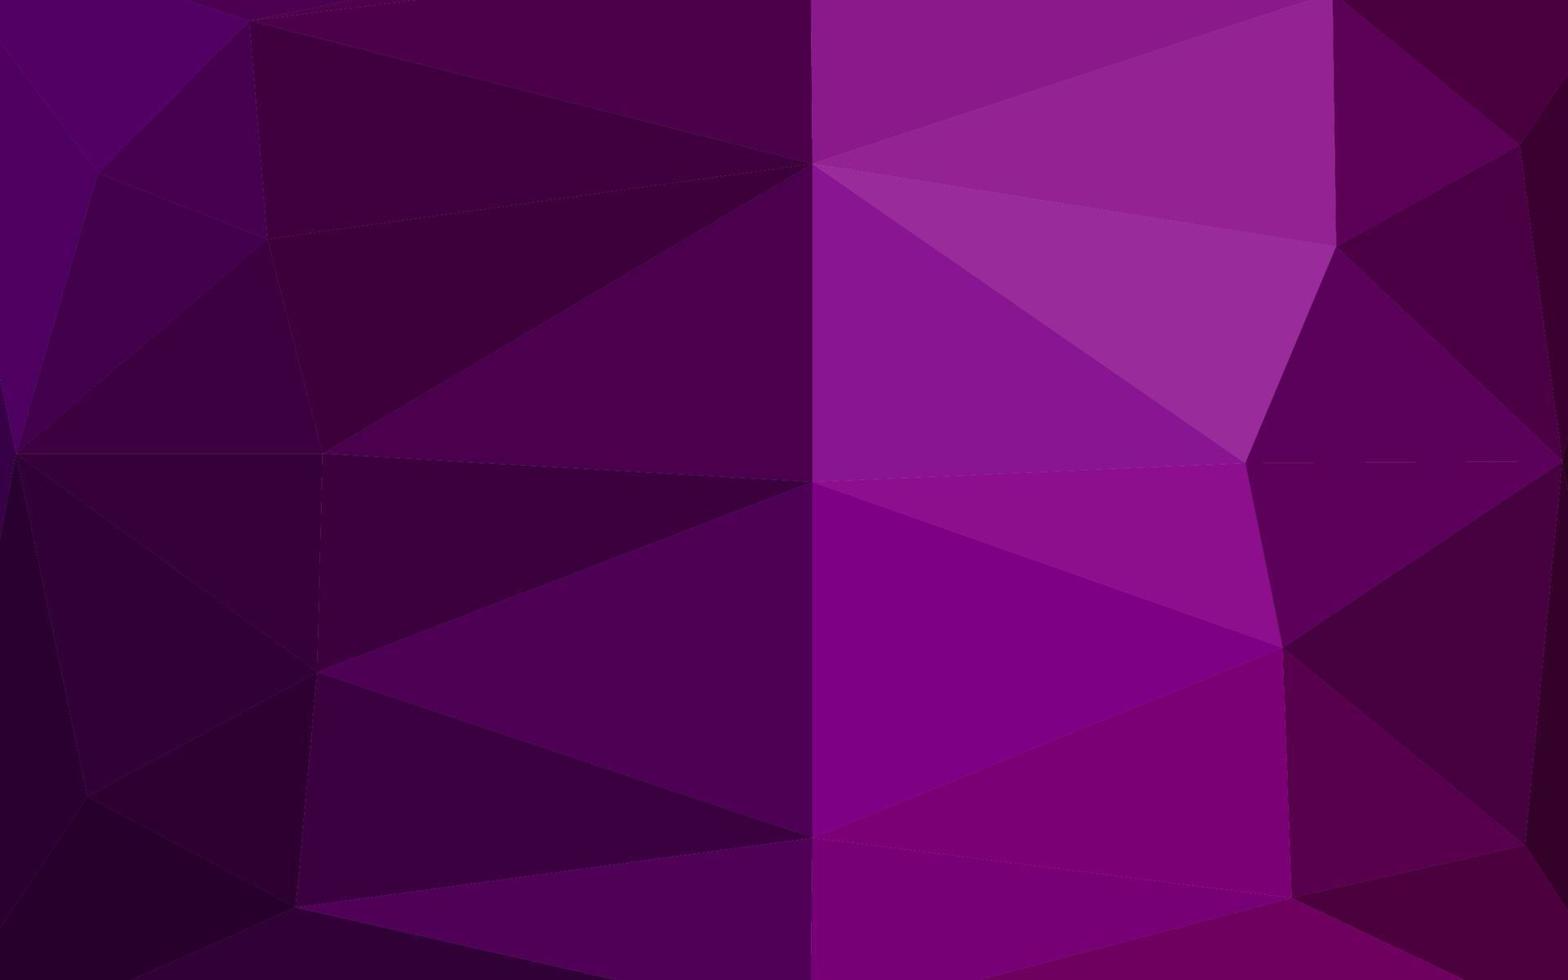 Dark Purple vector abstract polygonal texture.